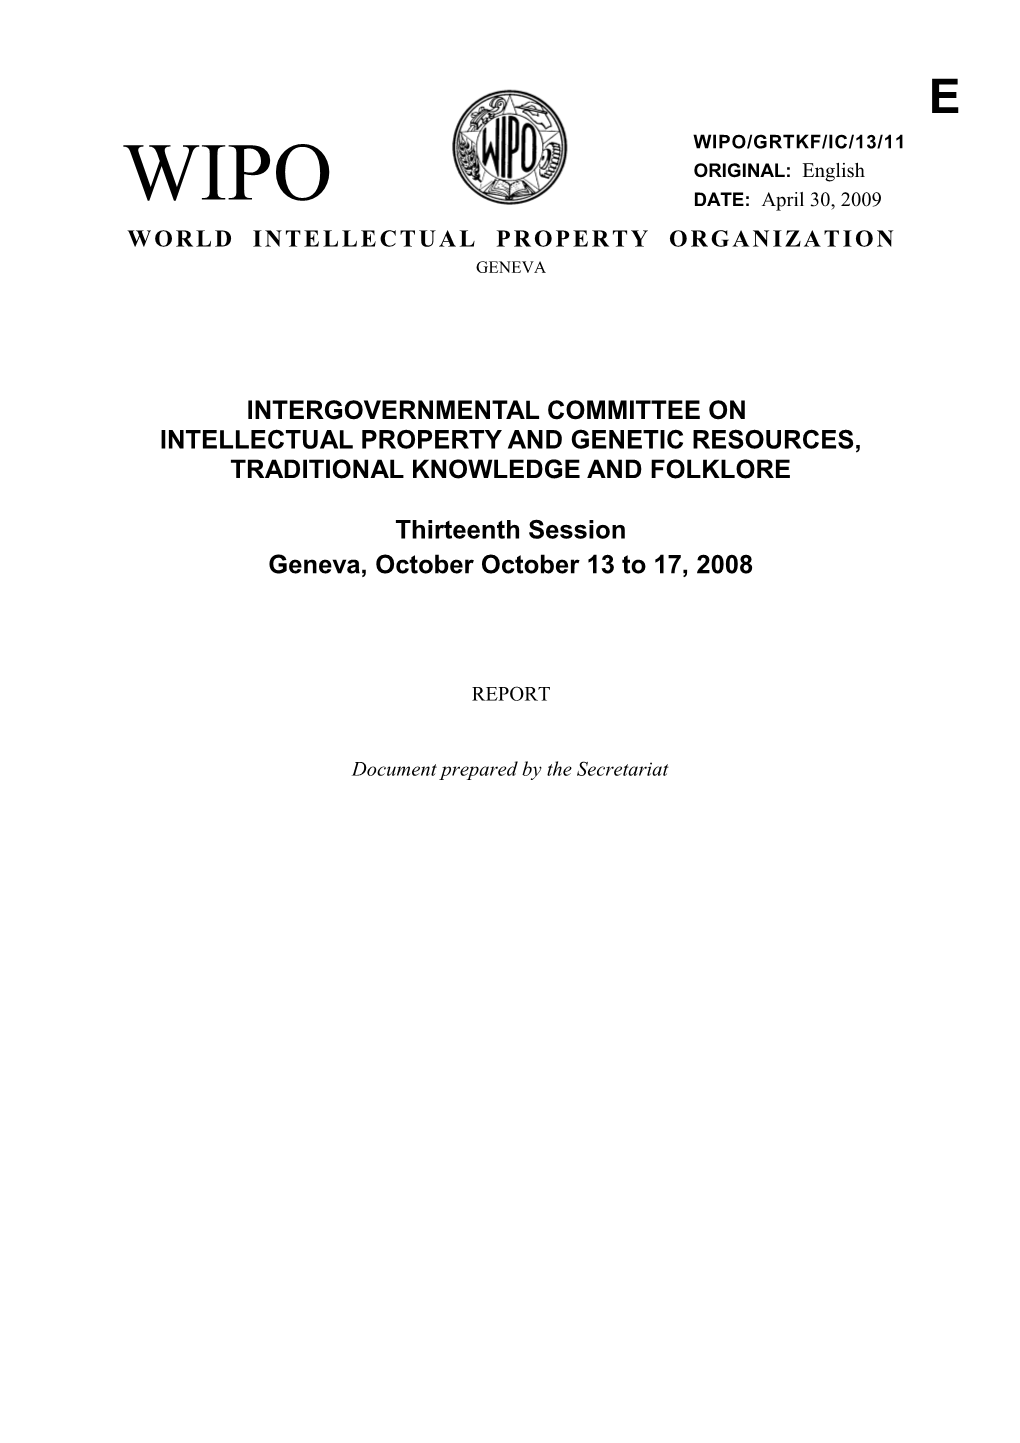 WIPO/GRTKF/IC/9/14 Prov. (Draft Report)